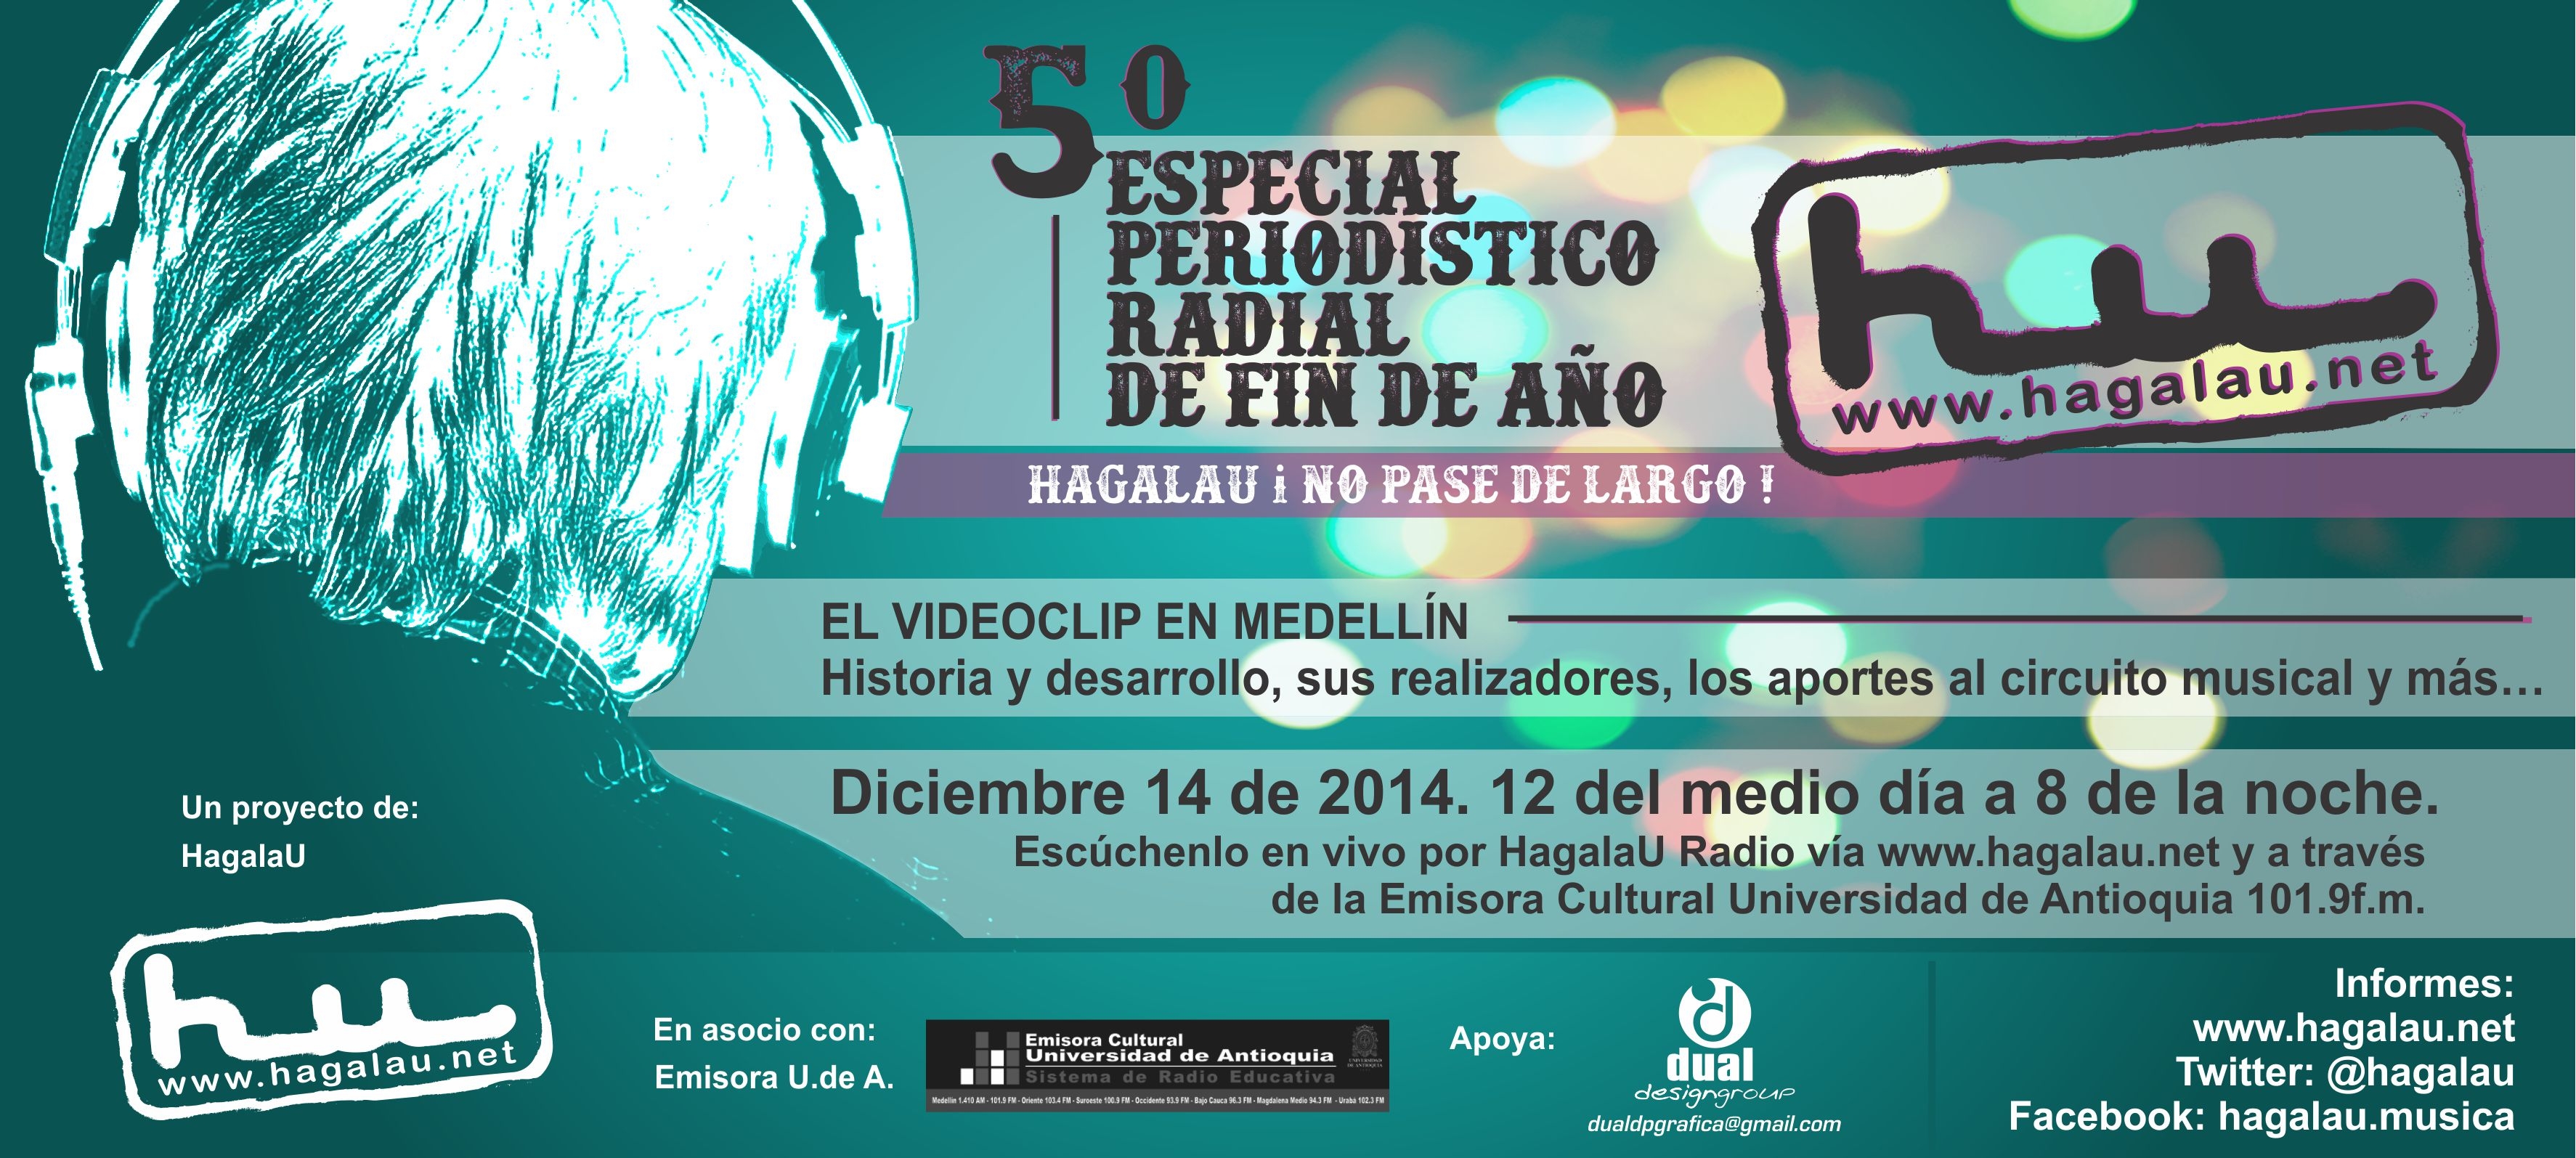 Especial periodístico: OjOsonoro #Elvideoclip Diciembre 14 12:00m.